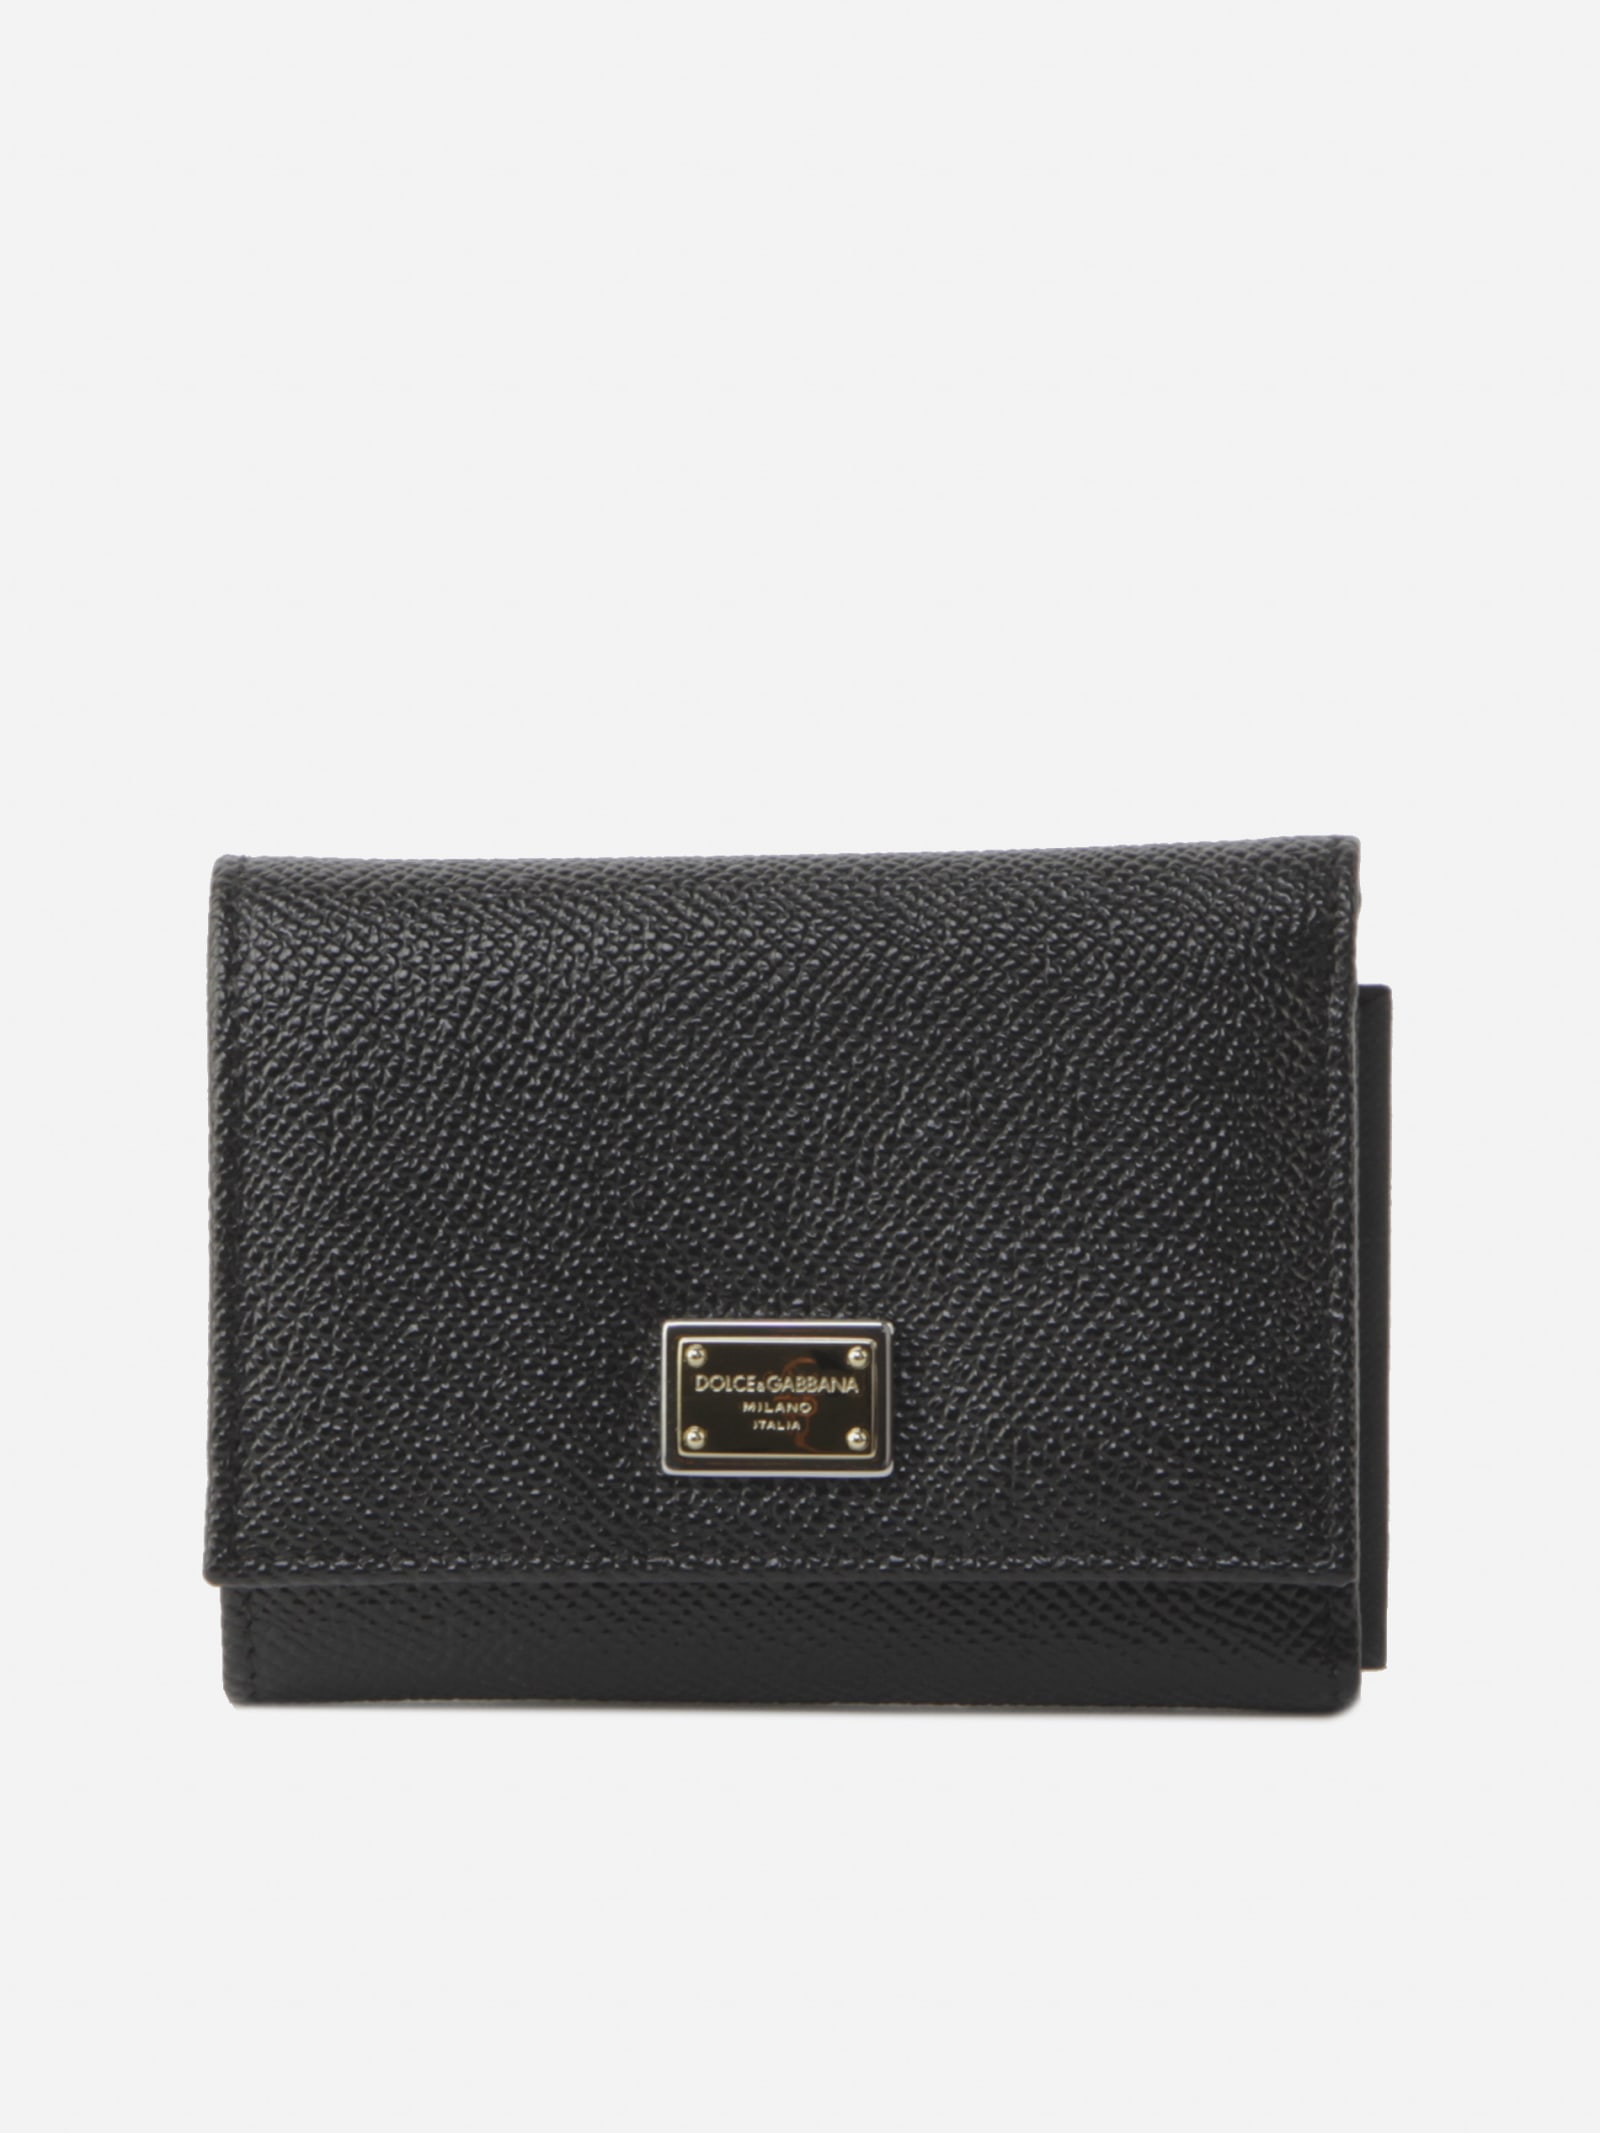 Dolce & Gabbana Dauphine Tri-fold Leather Wallet